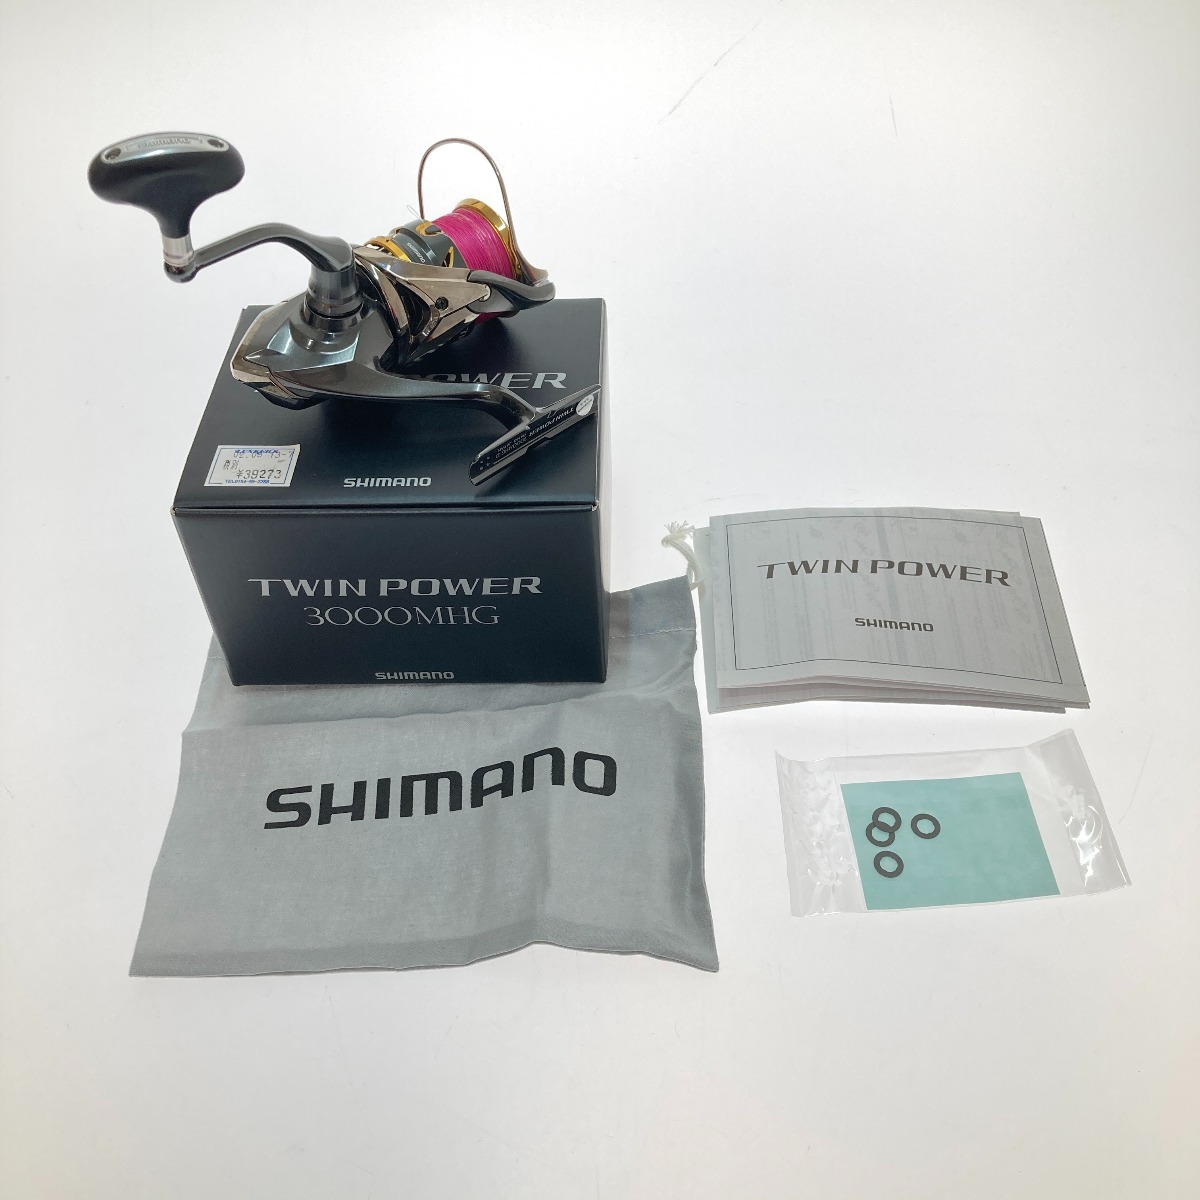 □□ SHIMANO シマノ 20 ツインパワー 3000MHG 04143 やや傷や汚れあり